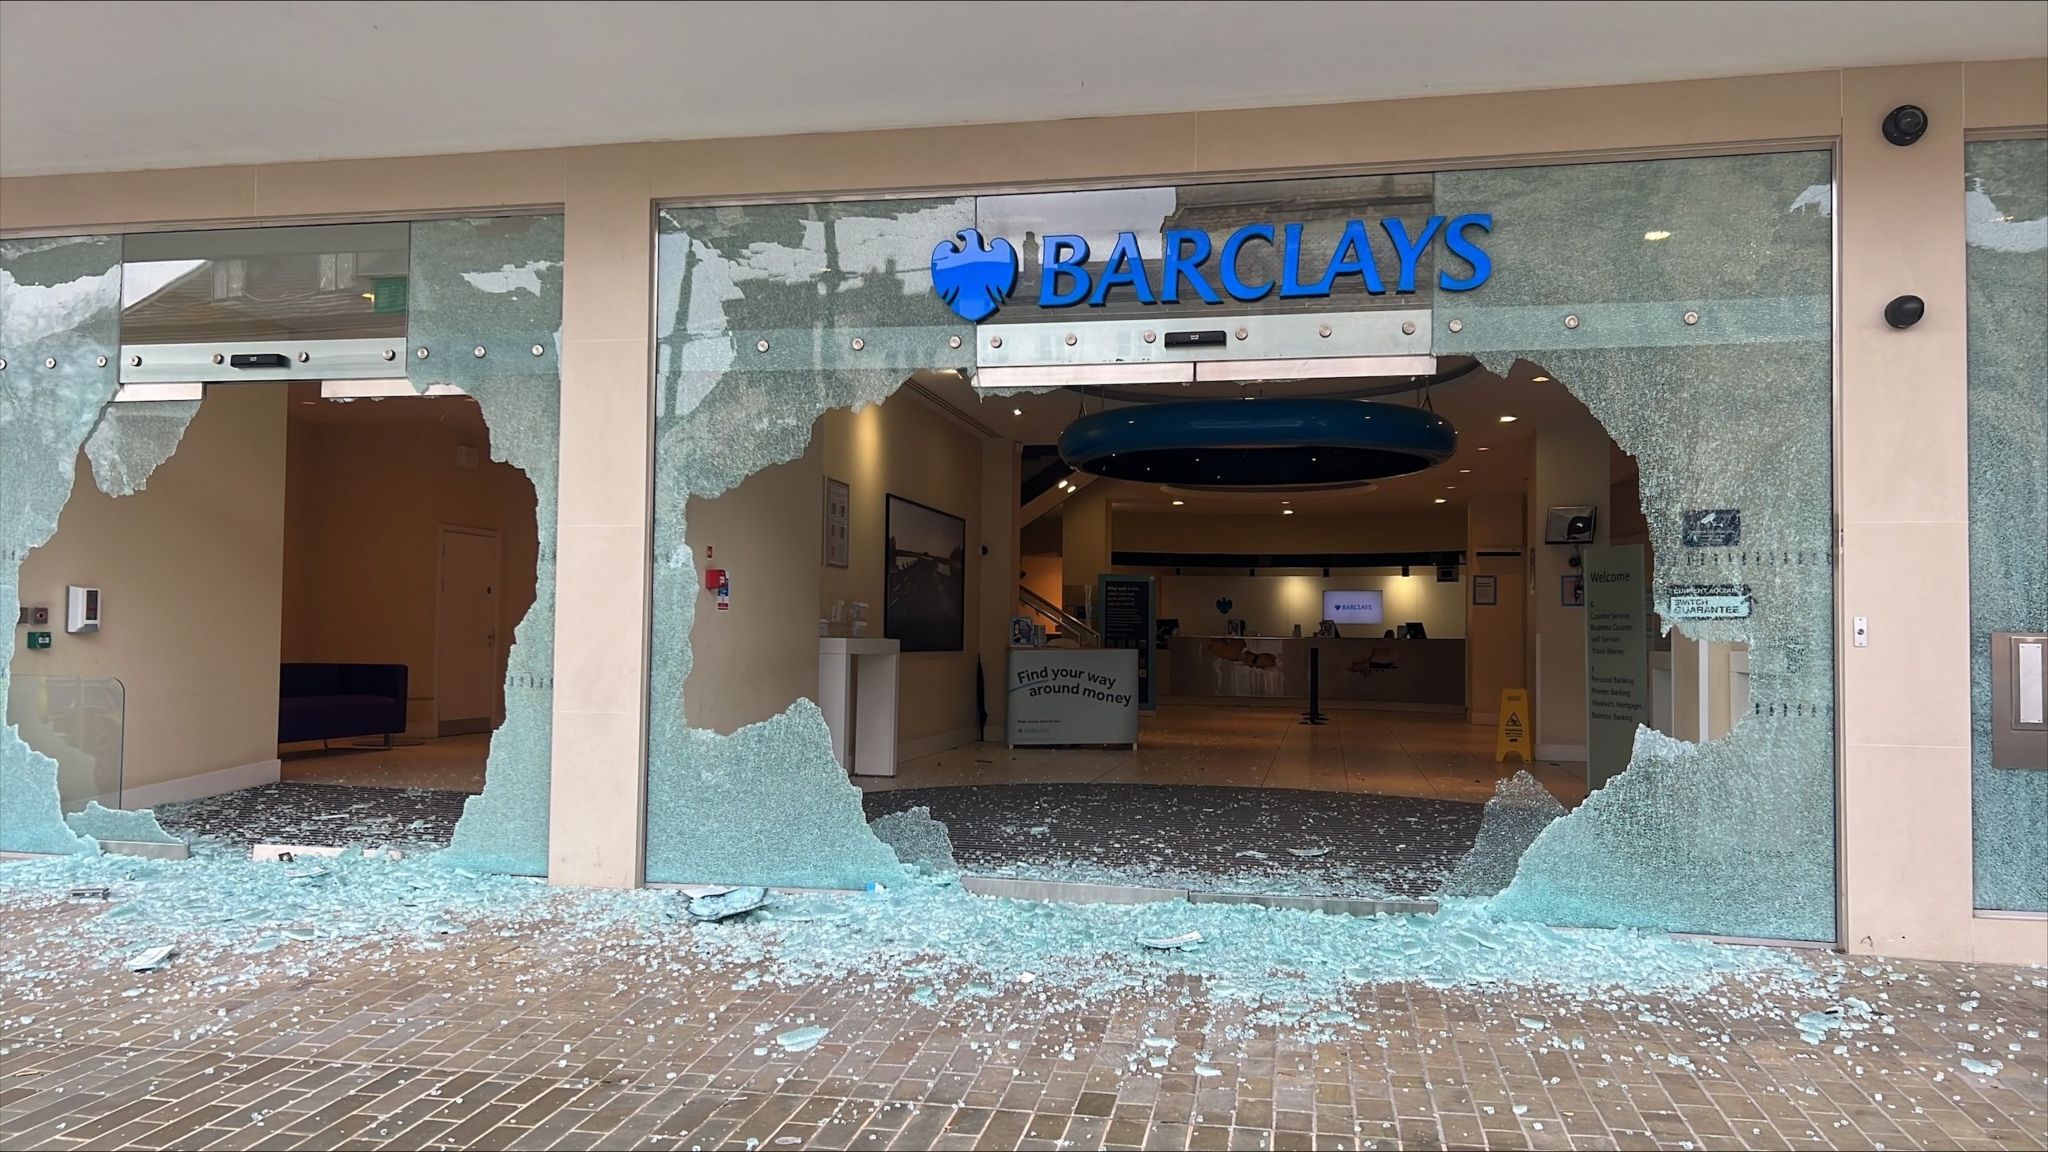 Vandalised Barclays bank building